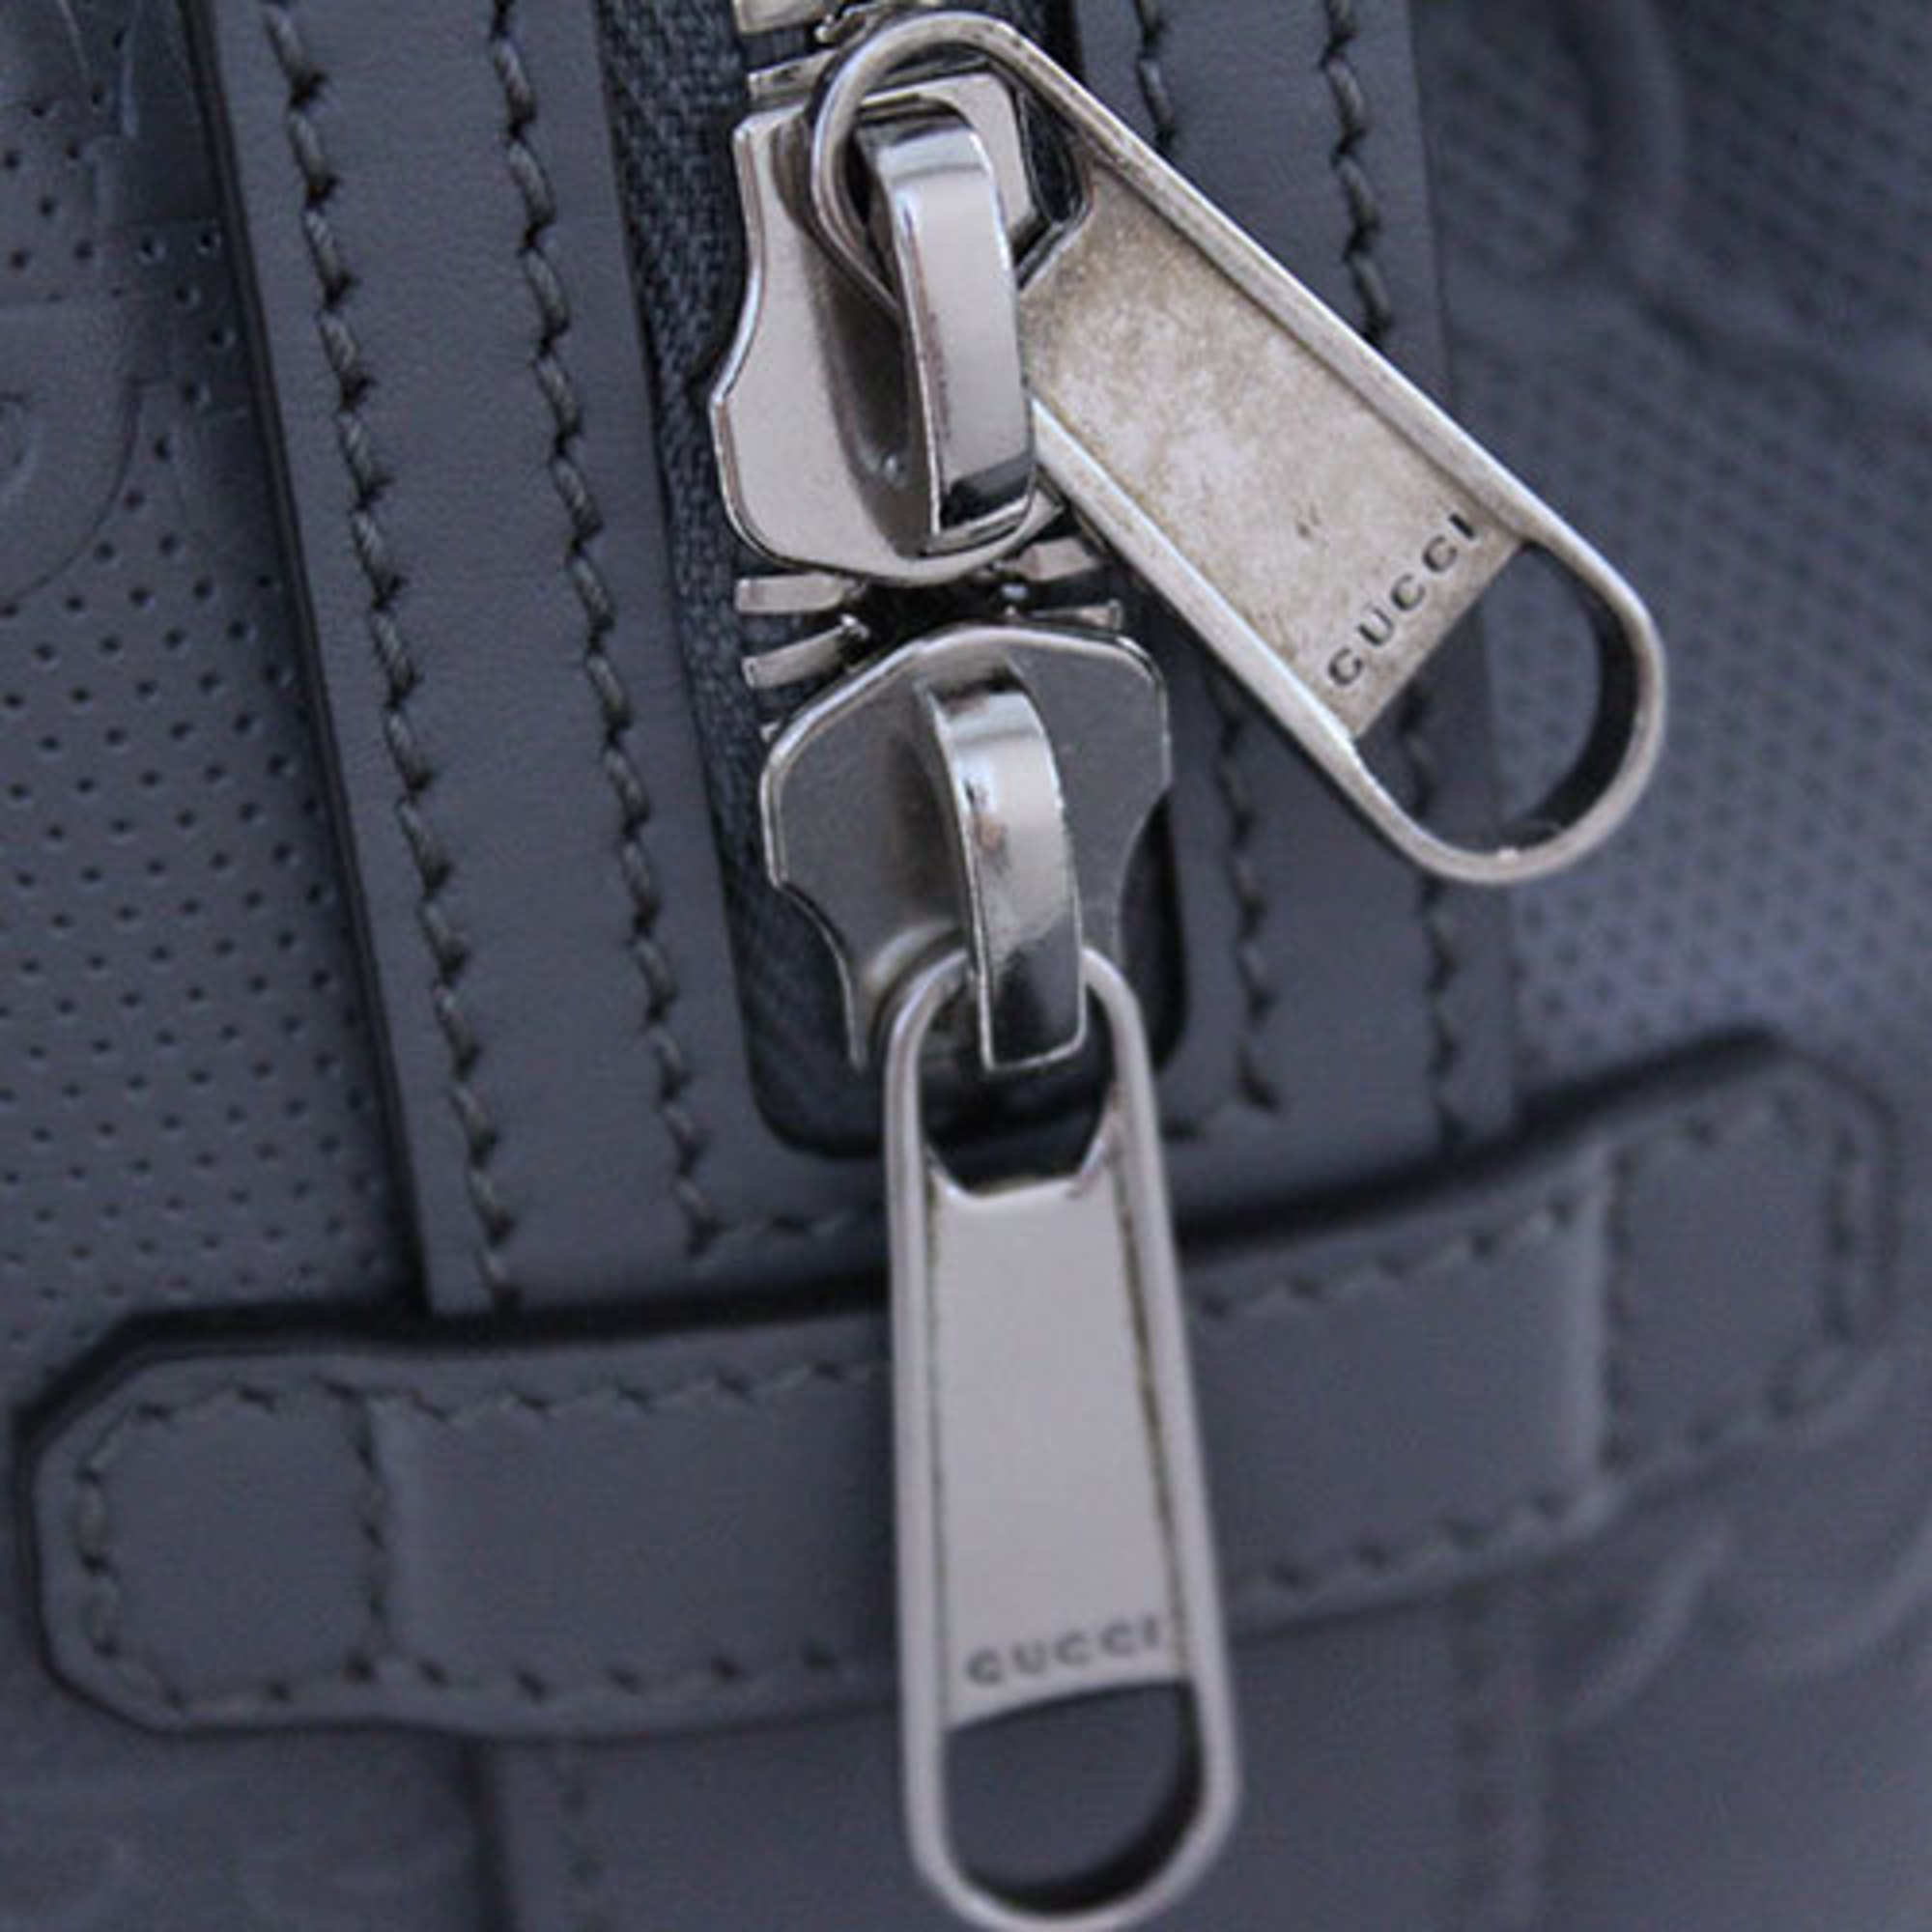 GUCCI bag ladies GG embossed tote handbag leather gray 625774